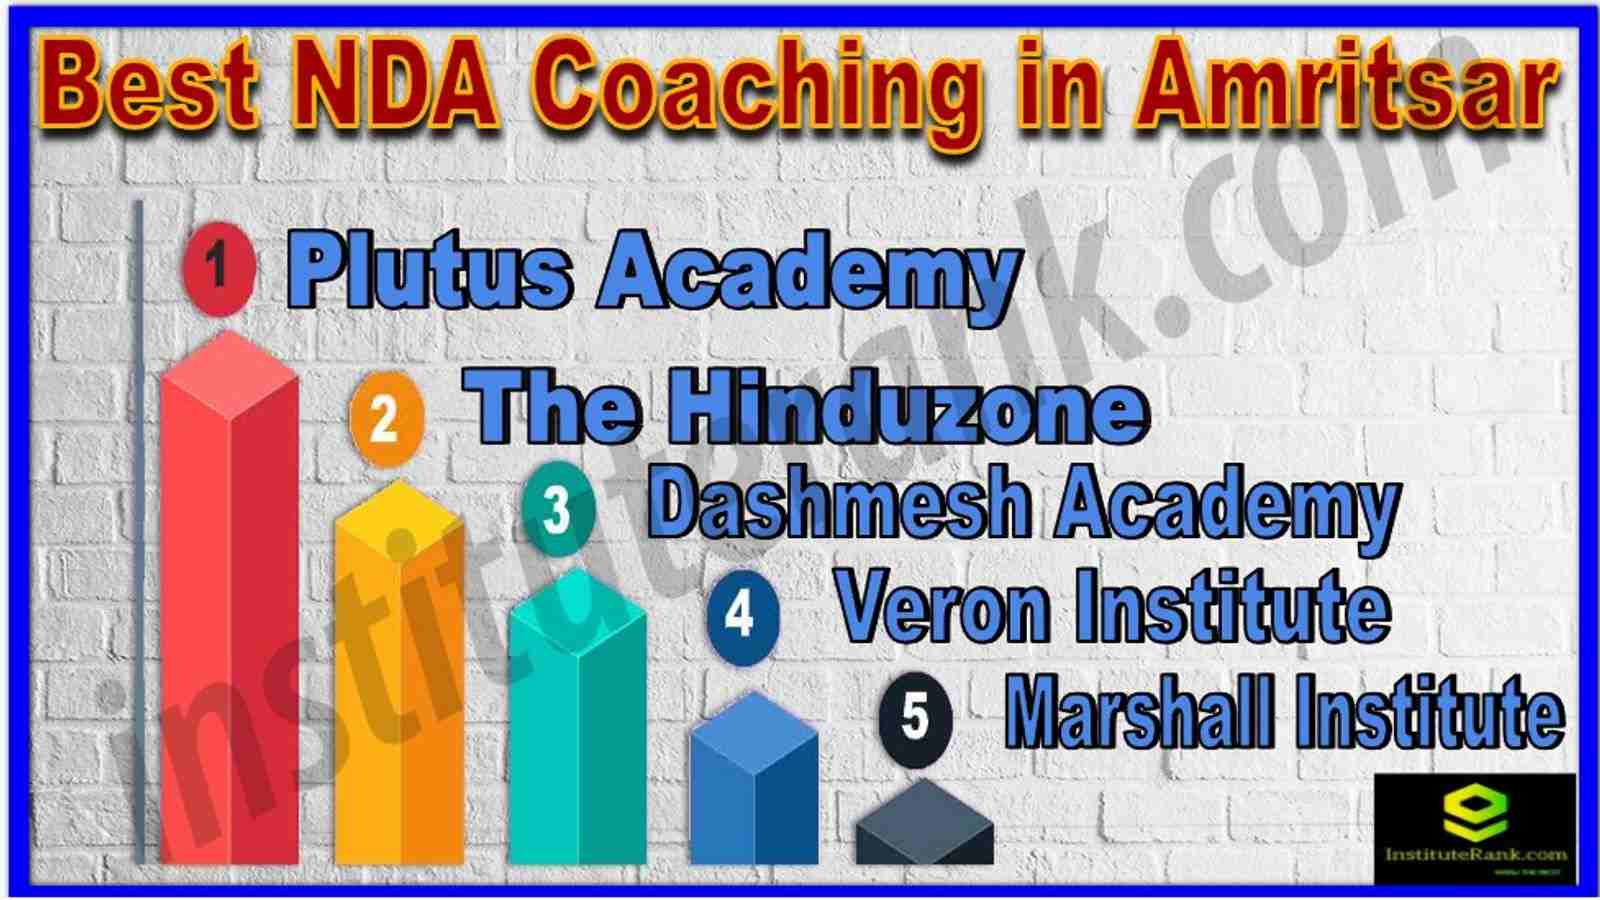 Best NDA Coaching in Amritsar